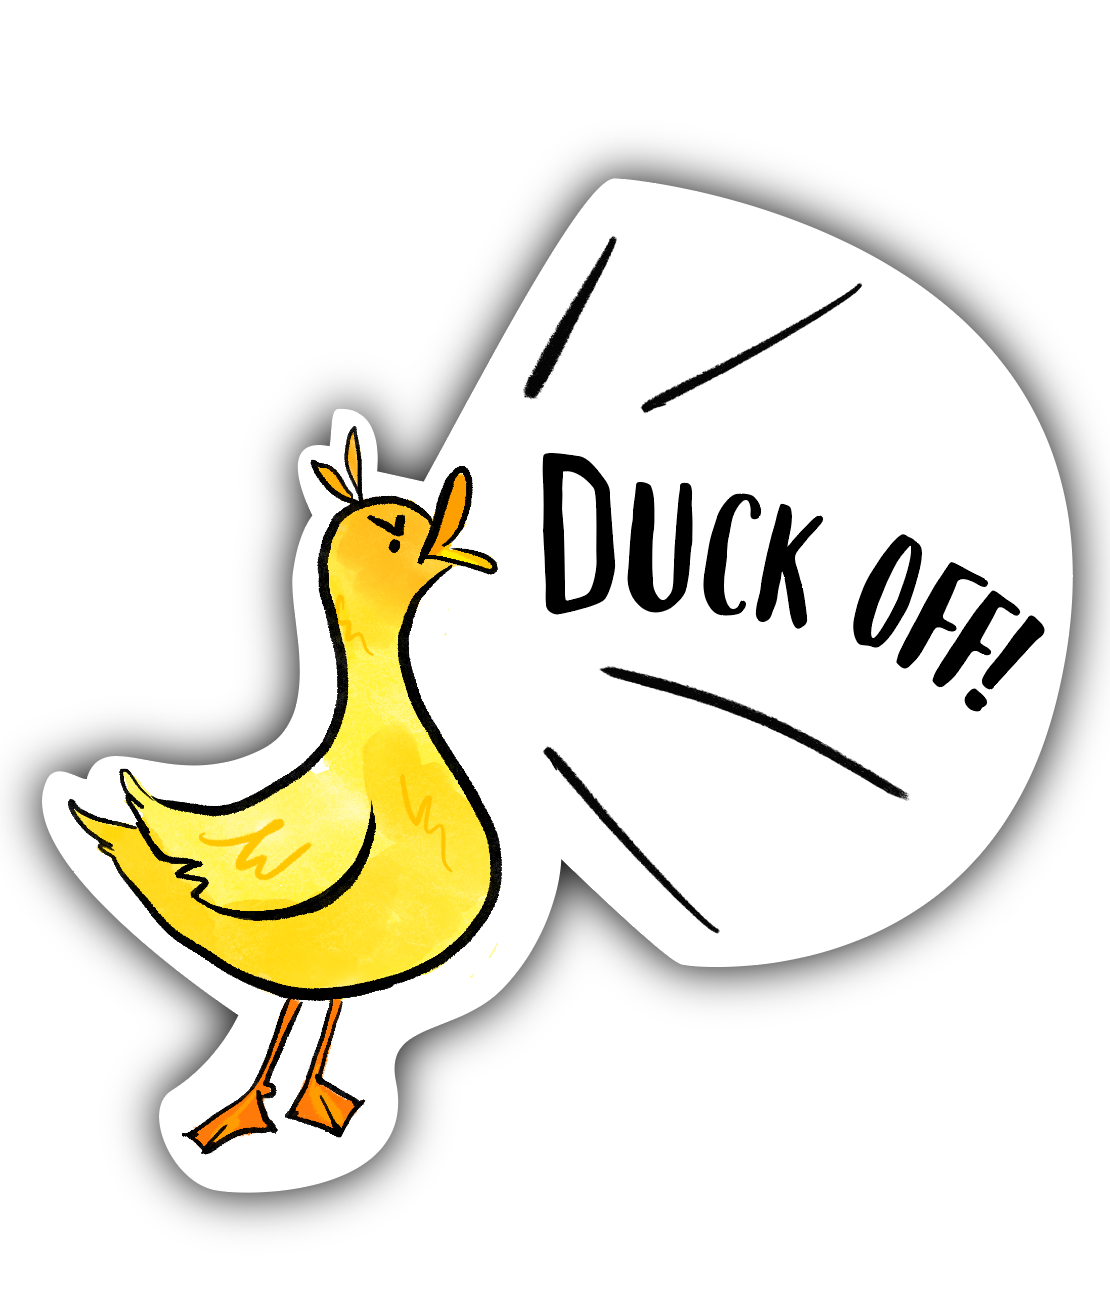 Duck Off! Yellow Duck Sticker ST817